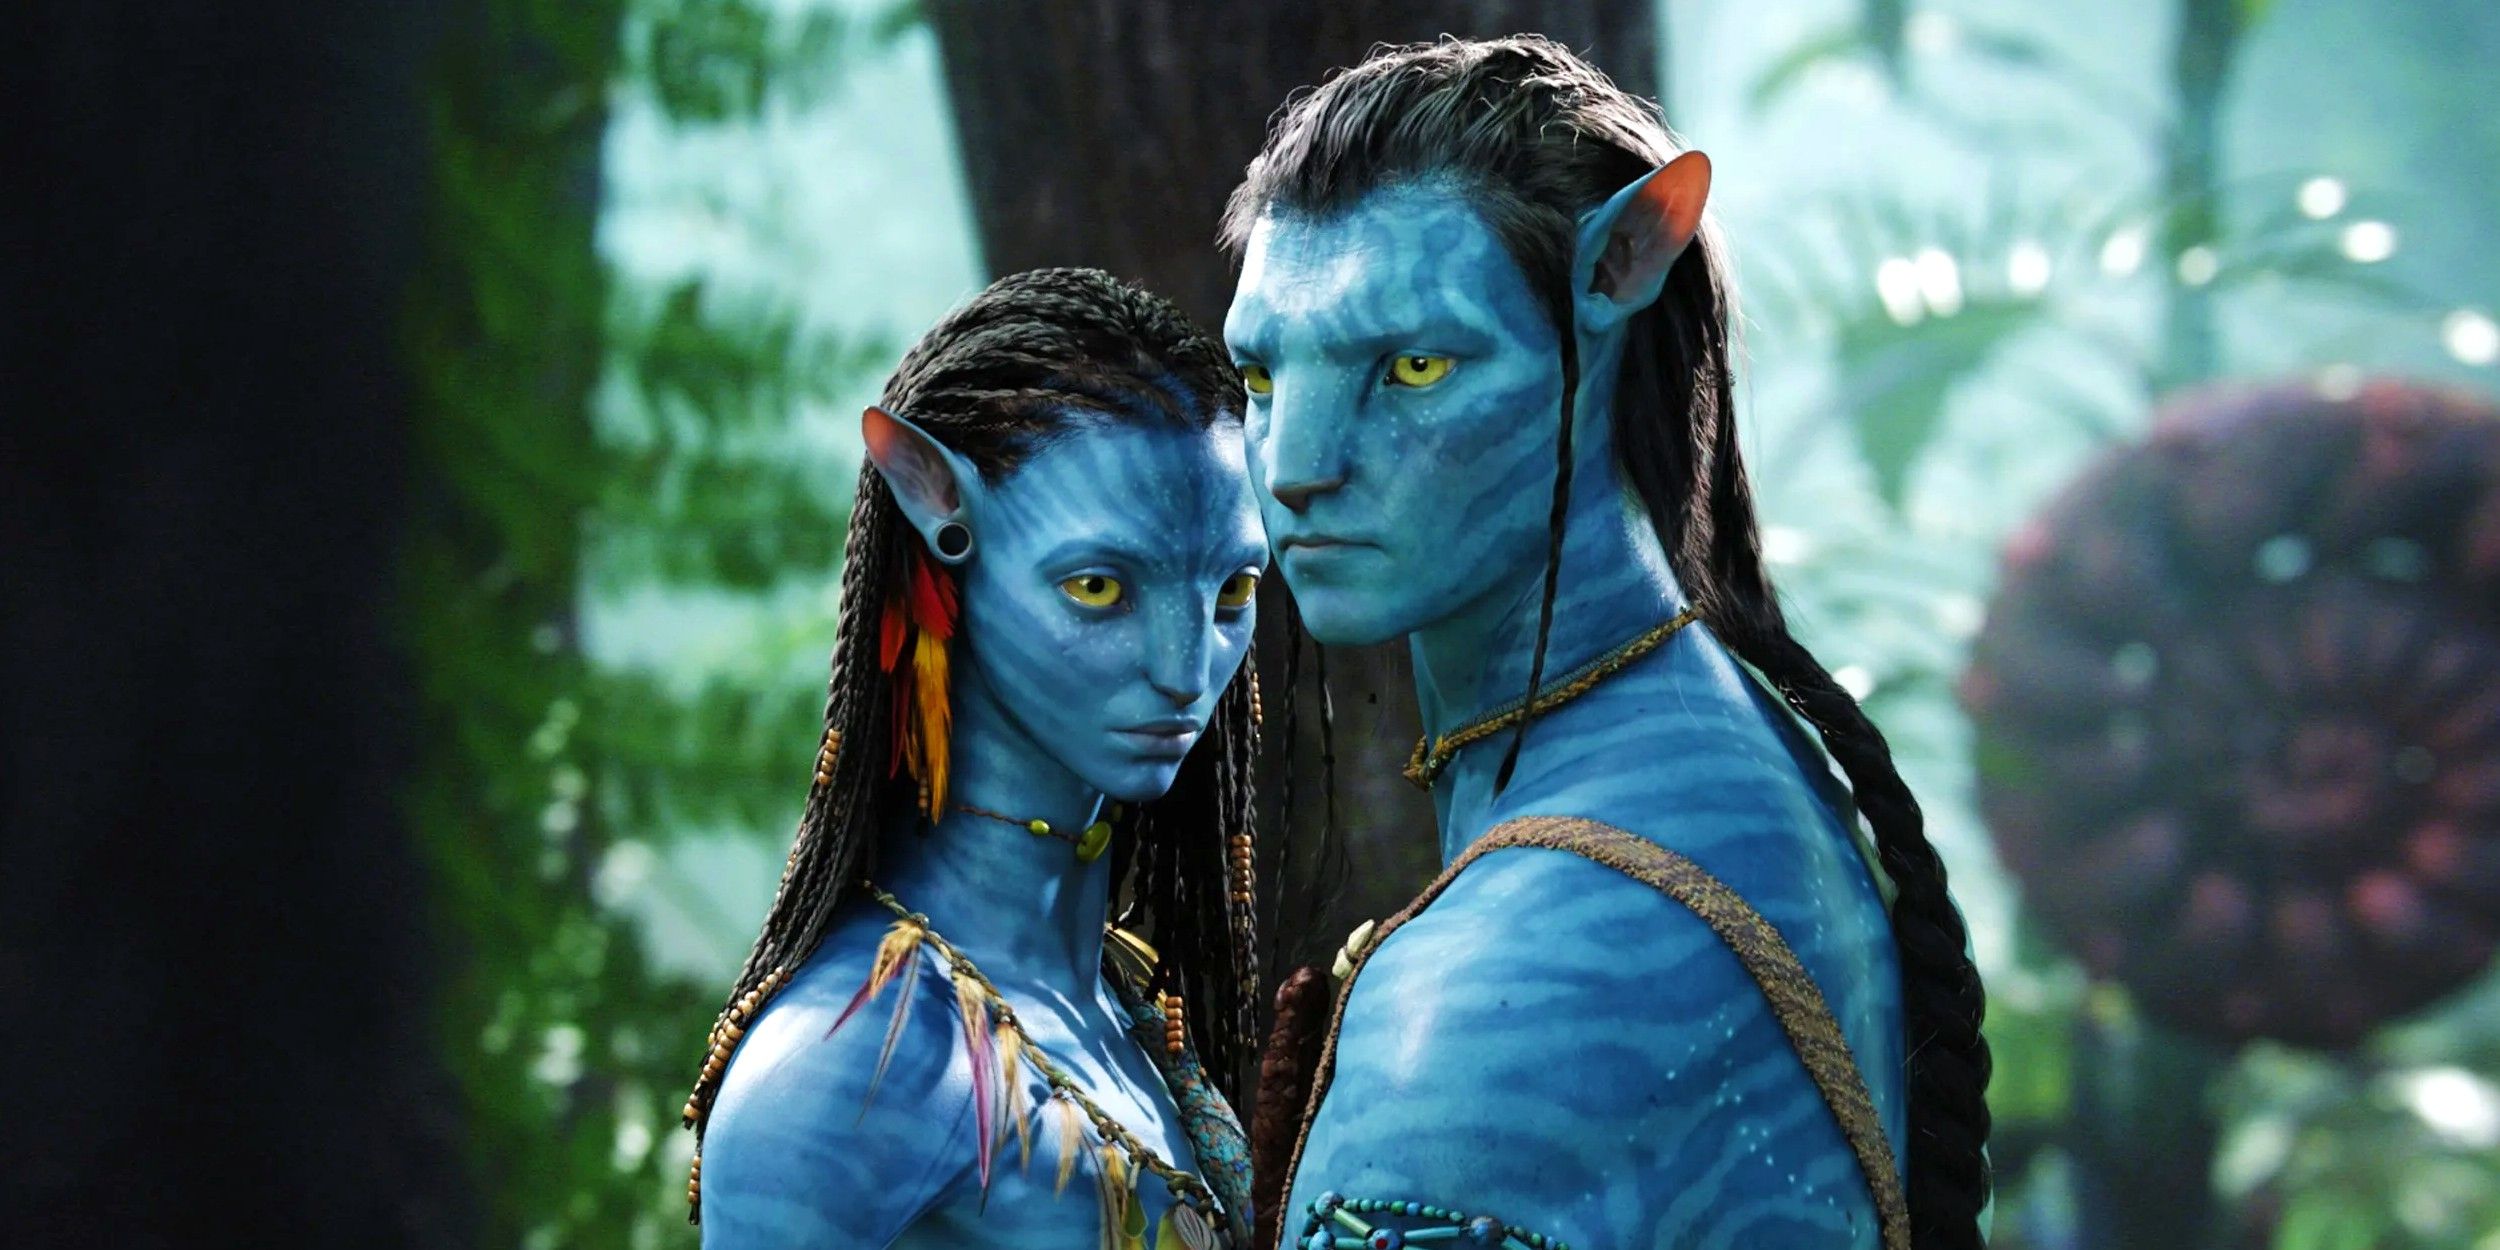 Avatar Sam Worthington as Jake Sully and Zoe Saldana as Neytiri